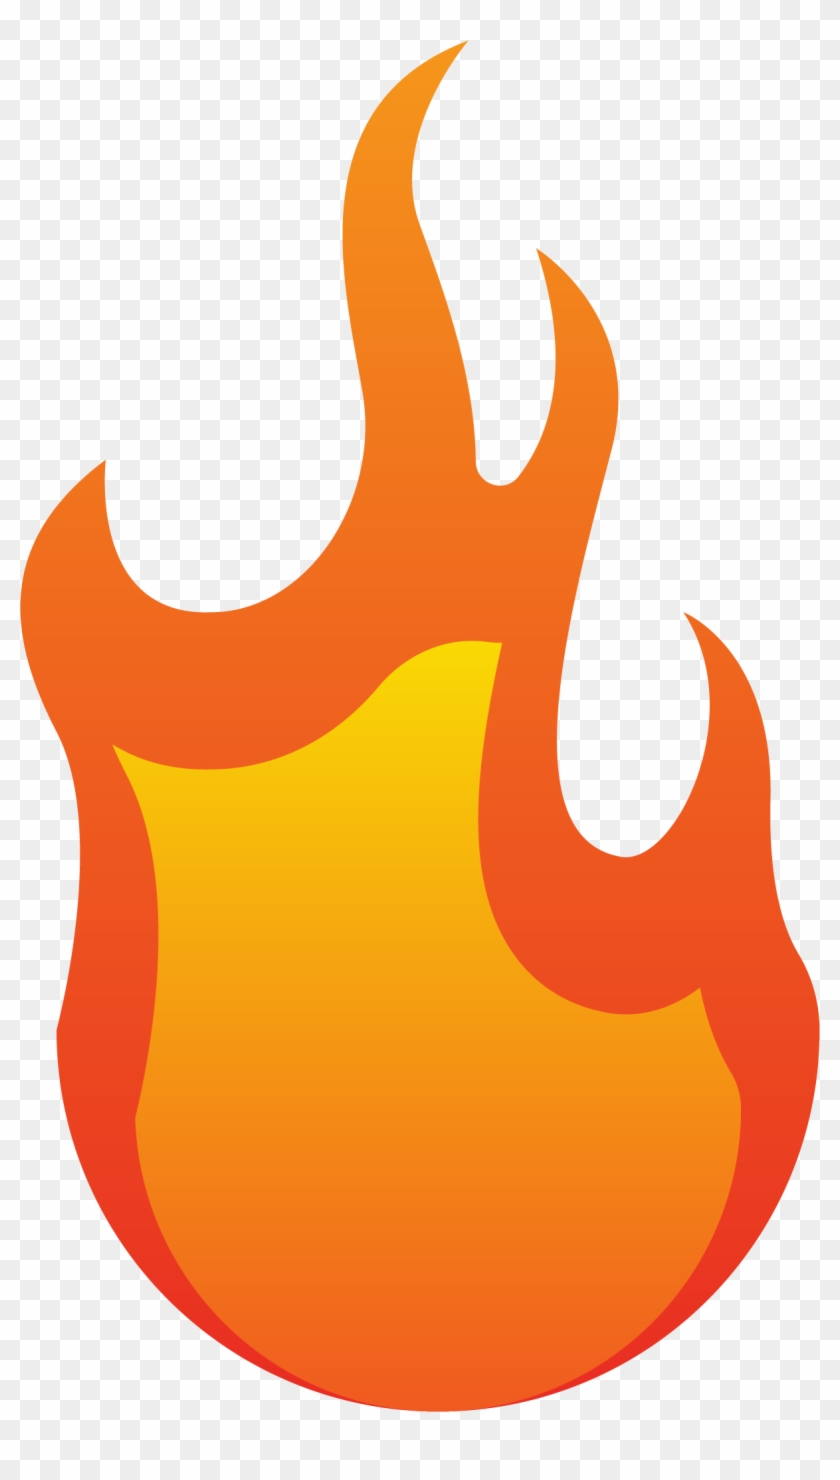 Combustion Burn Flame Clip Art - Combustion Burn Flame Clip Art #402735